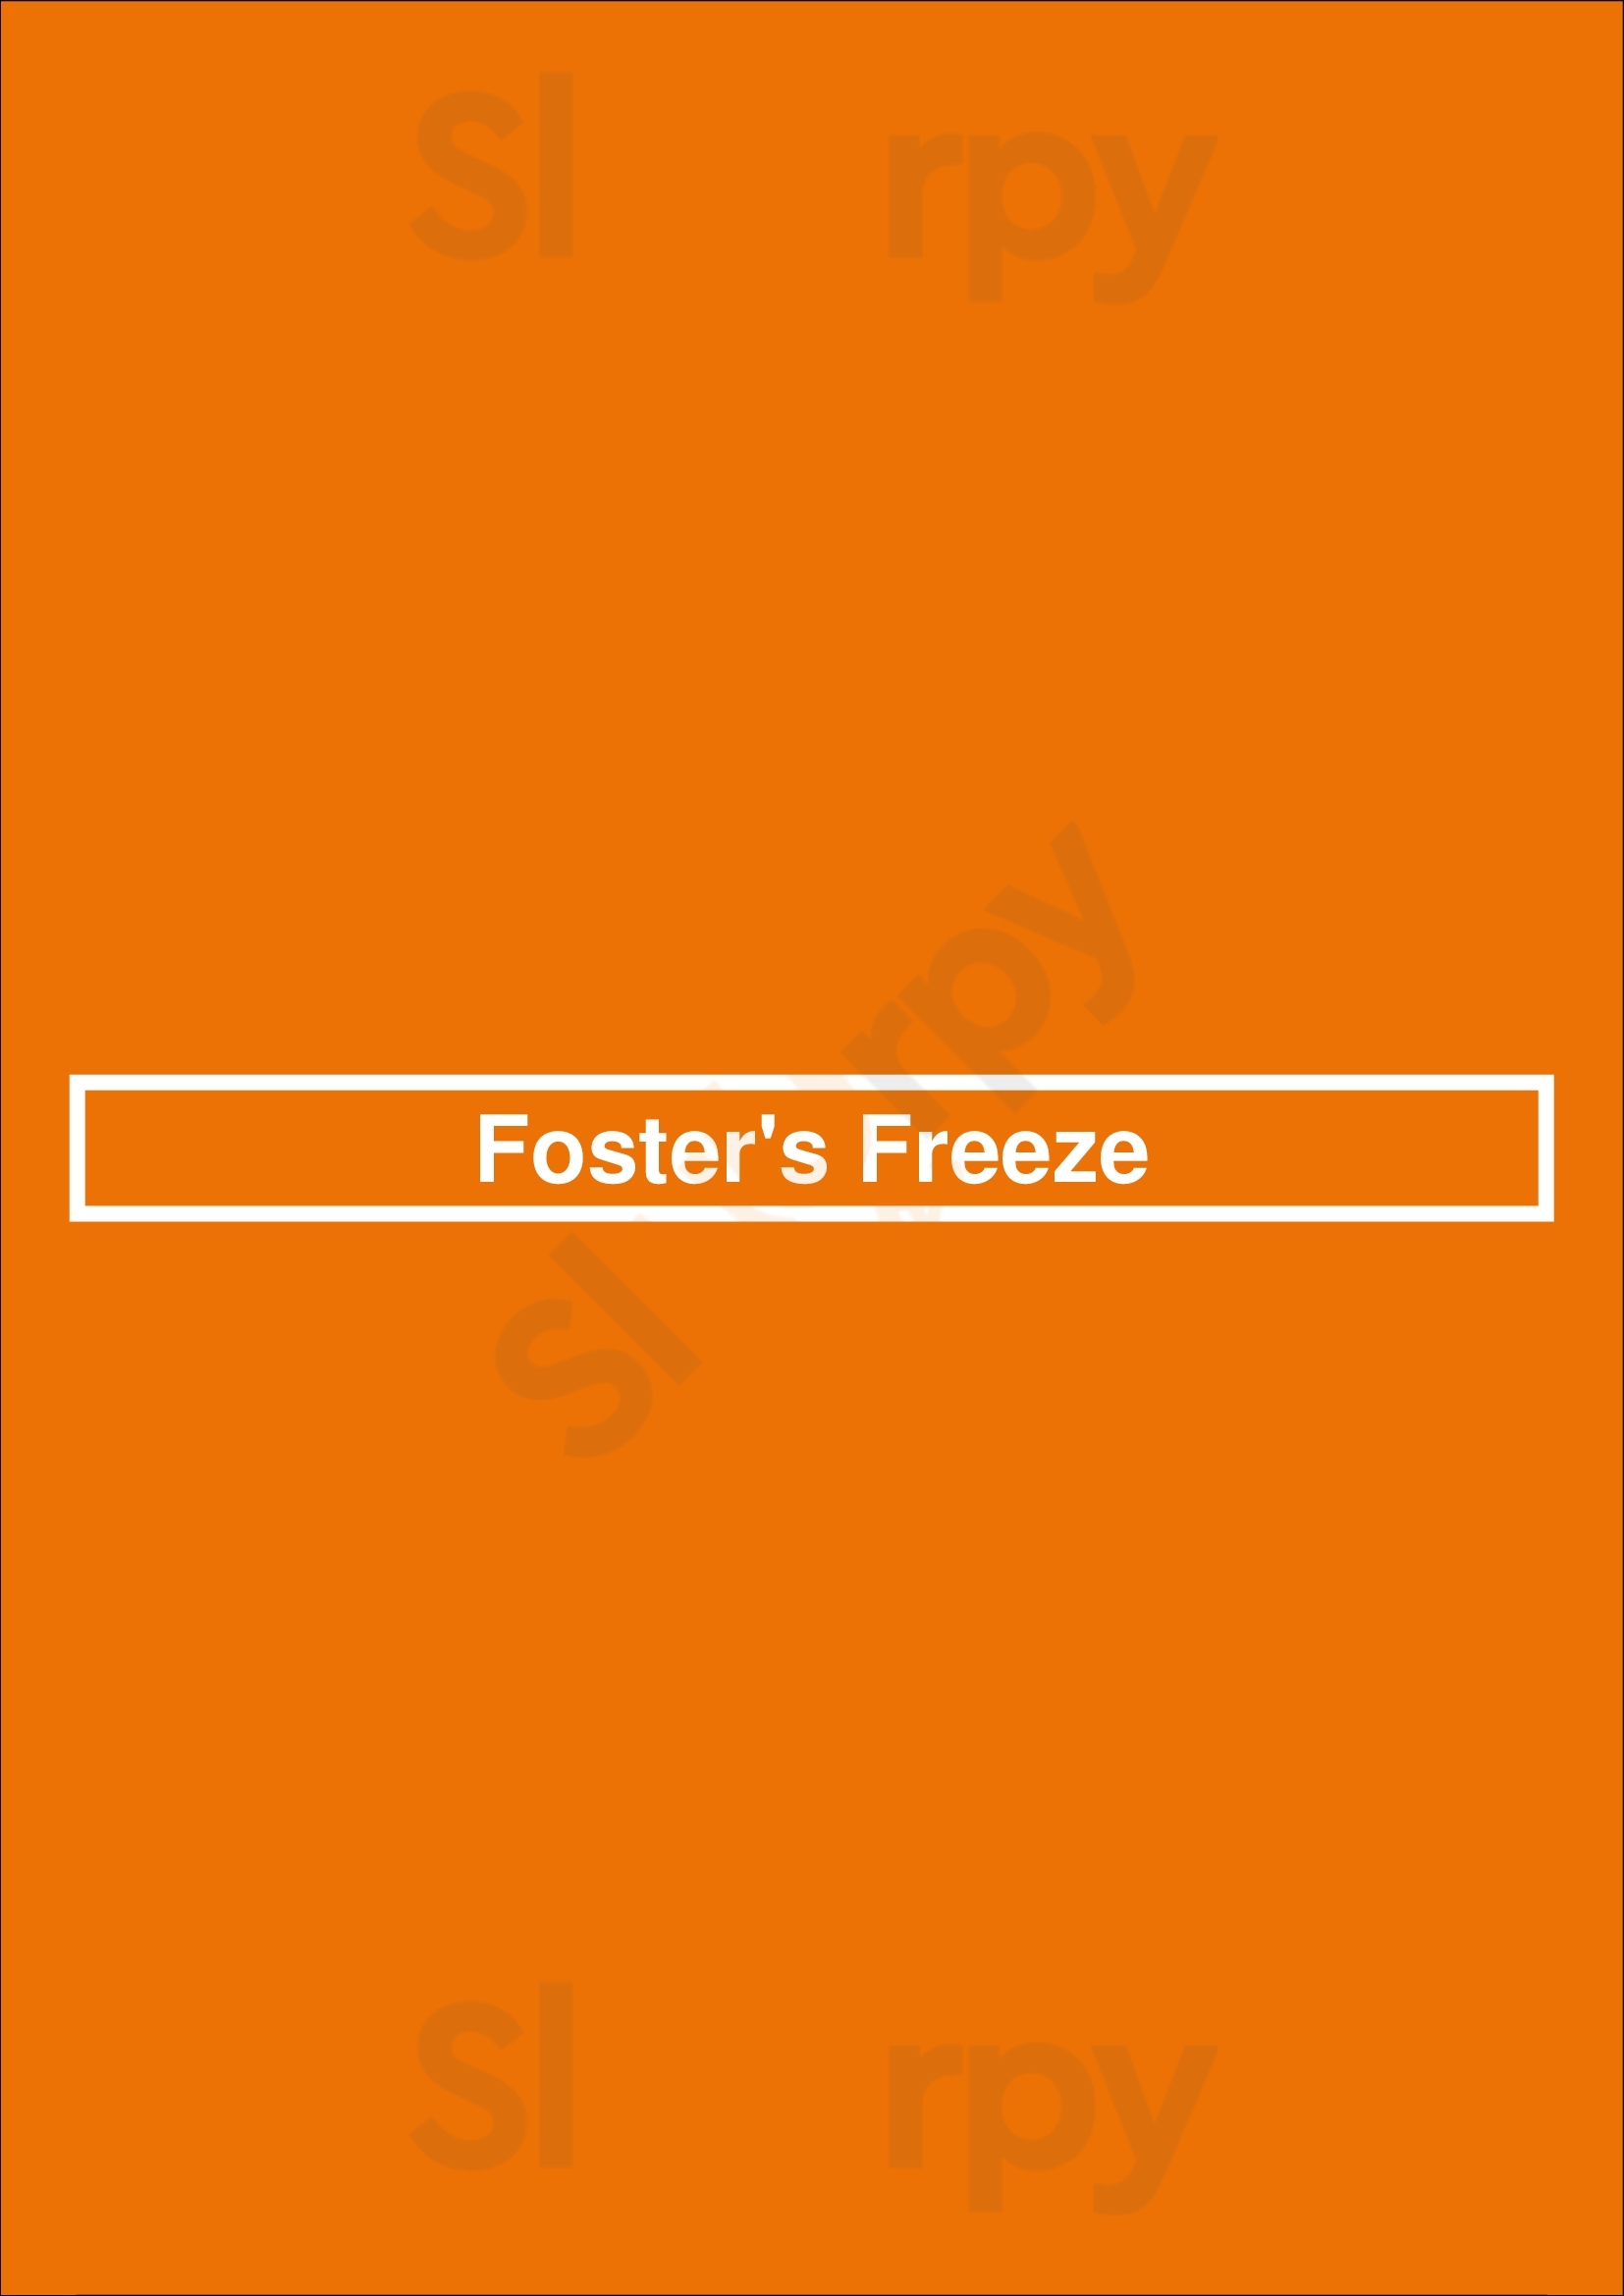 Foster's Freeze Campbell Menu - 1